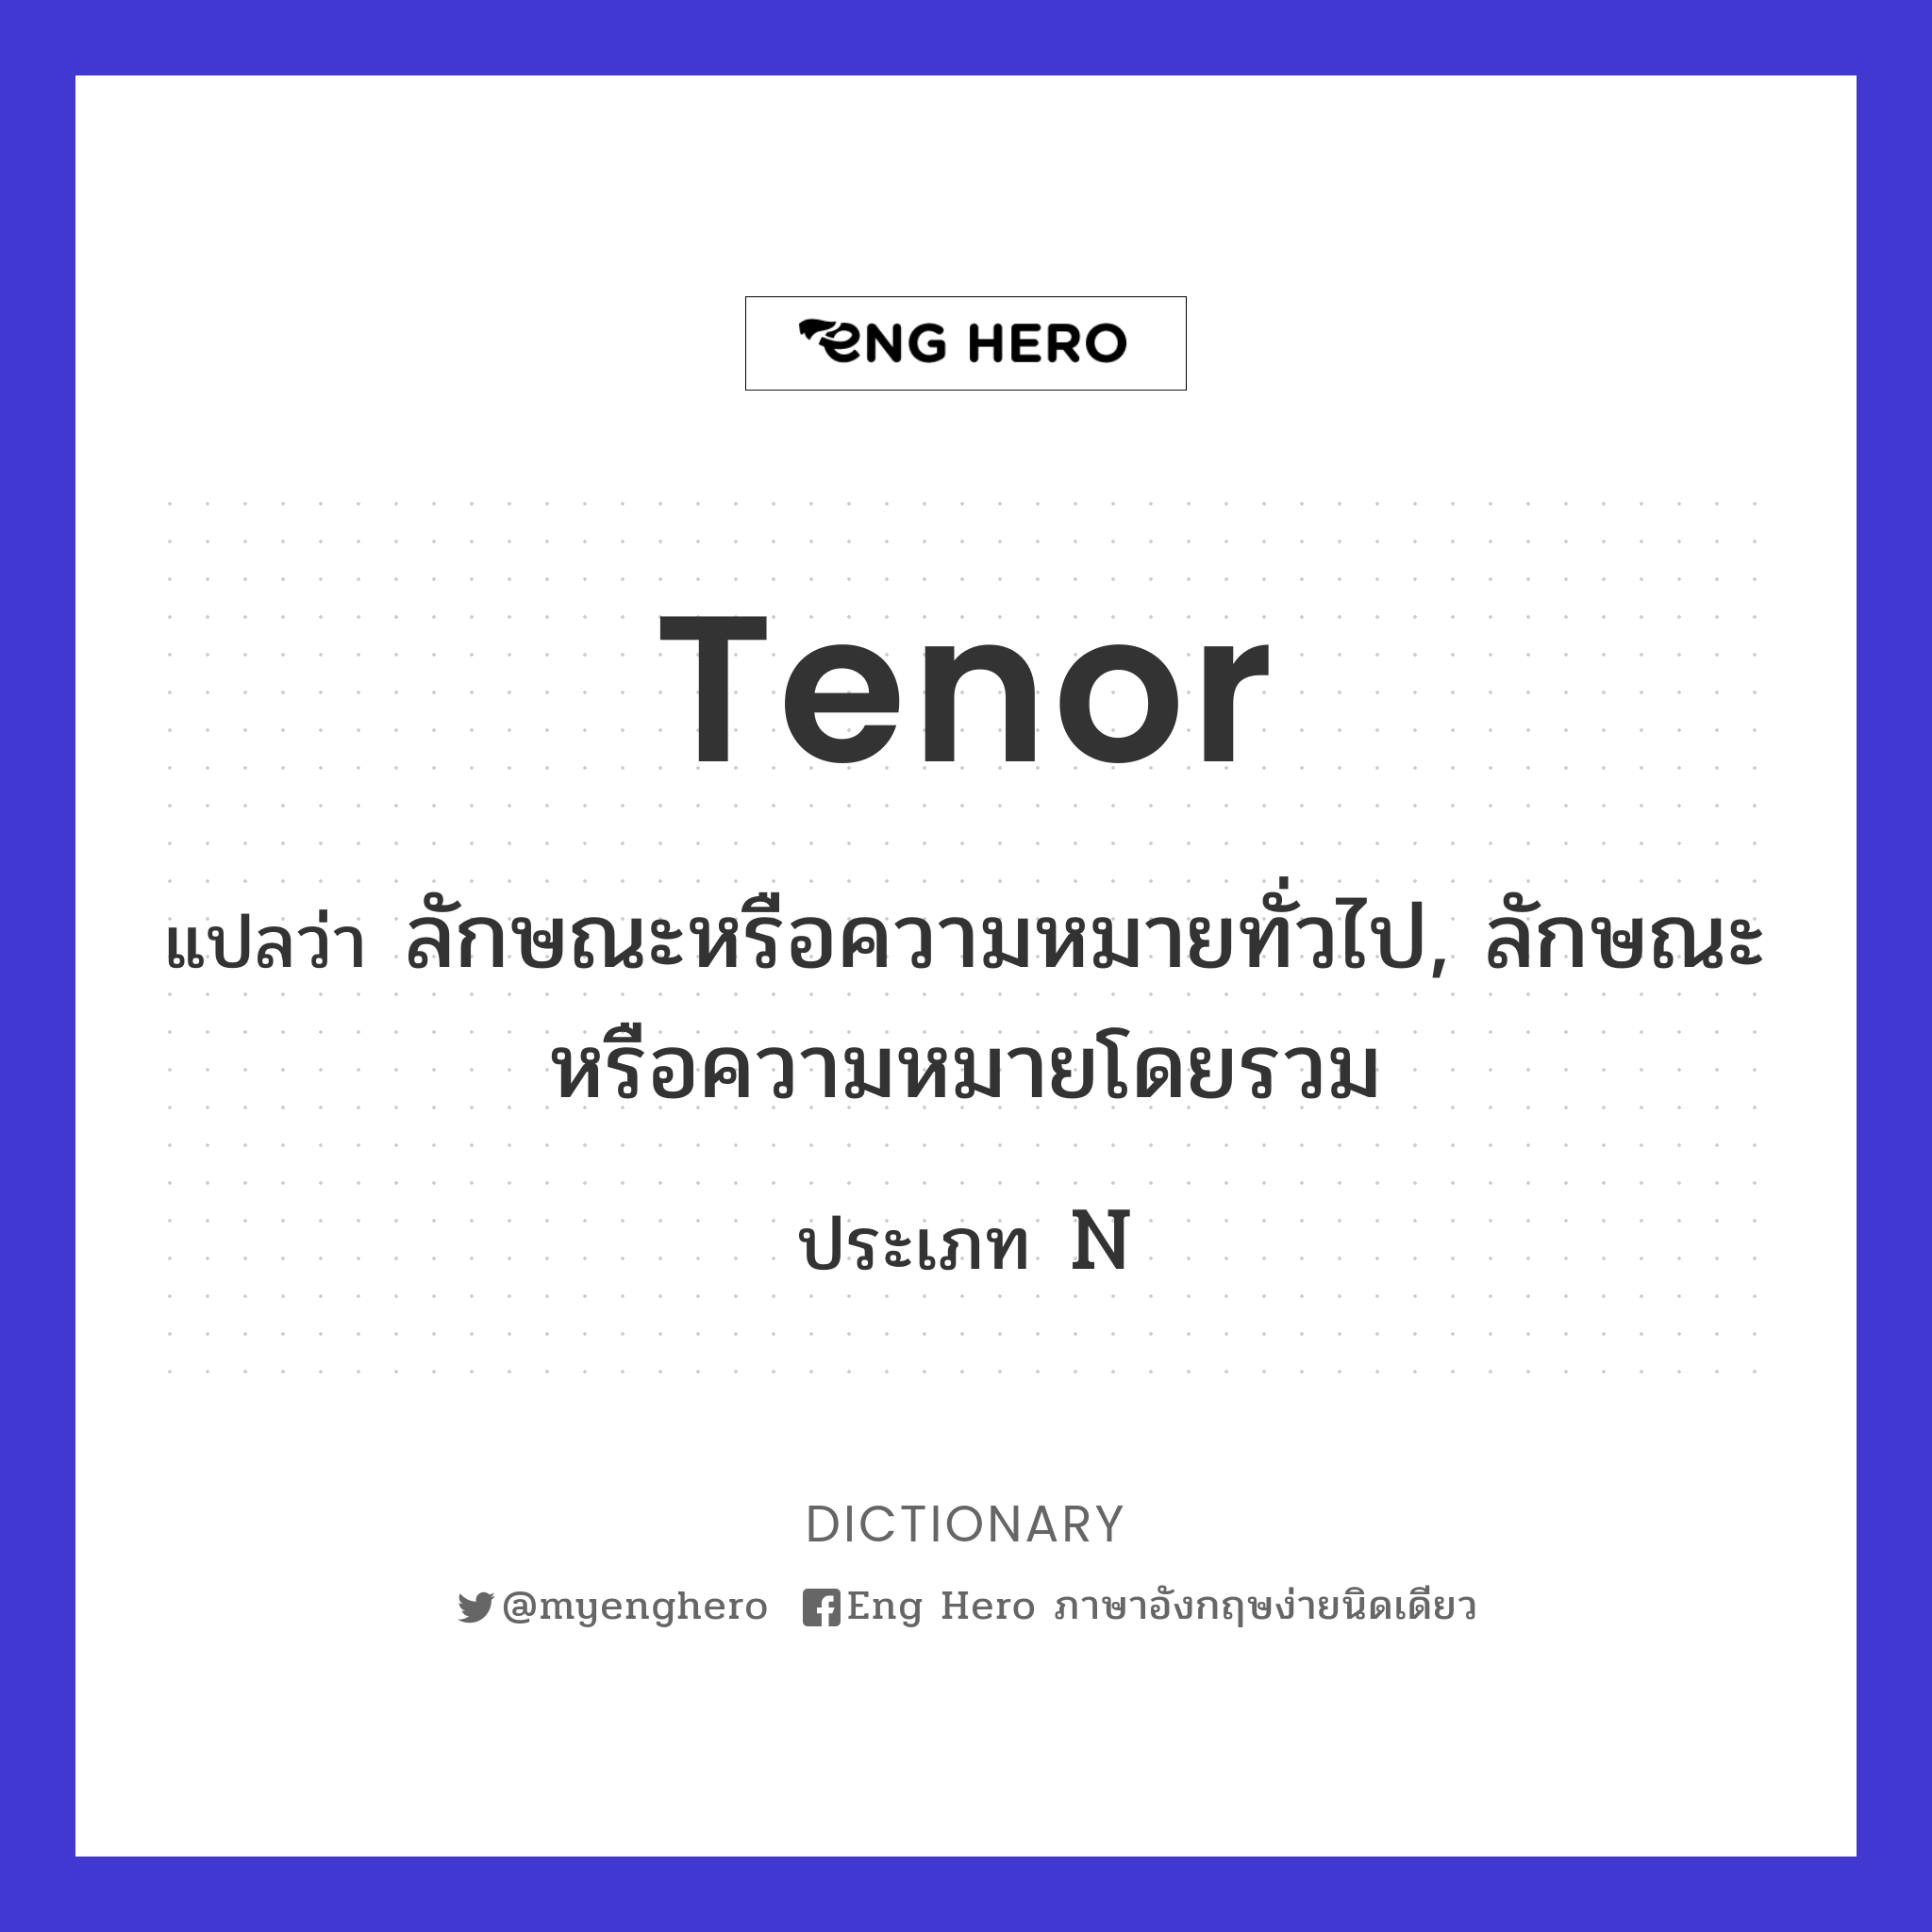 tenor